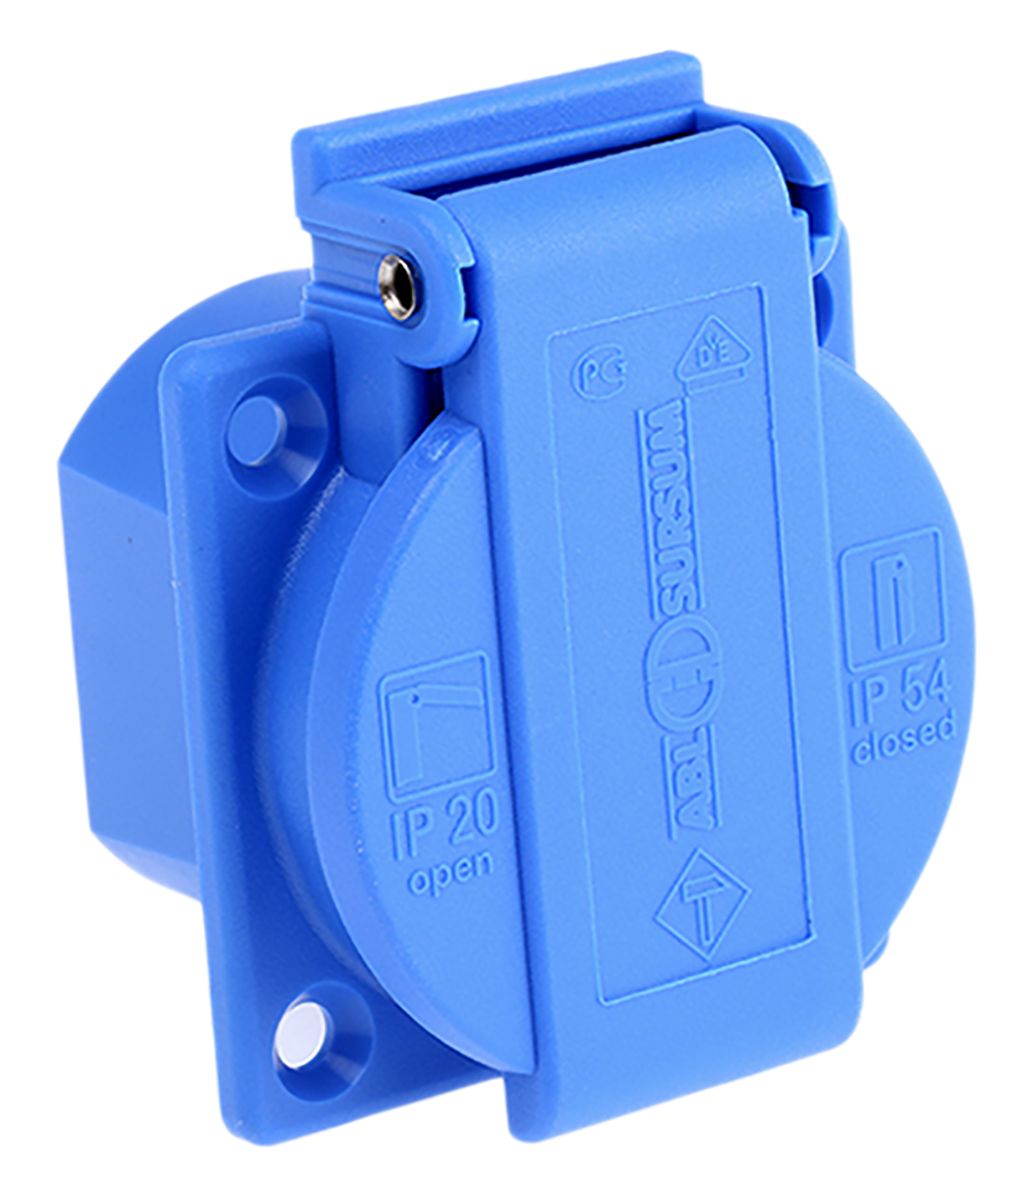 ABL Sursum Blue 1 Gang Plug Socket, 16A, Type F - German Schuko, Outdoor Use